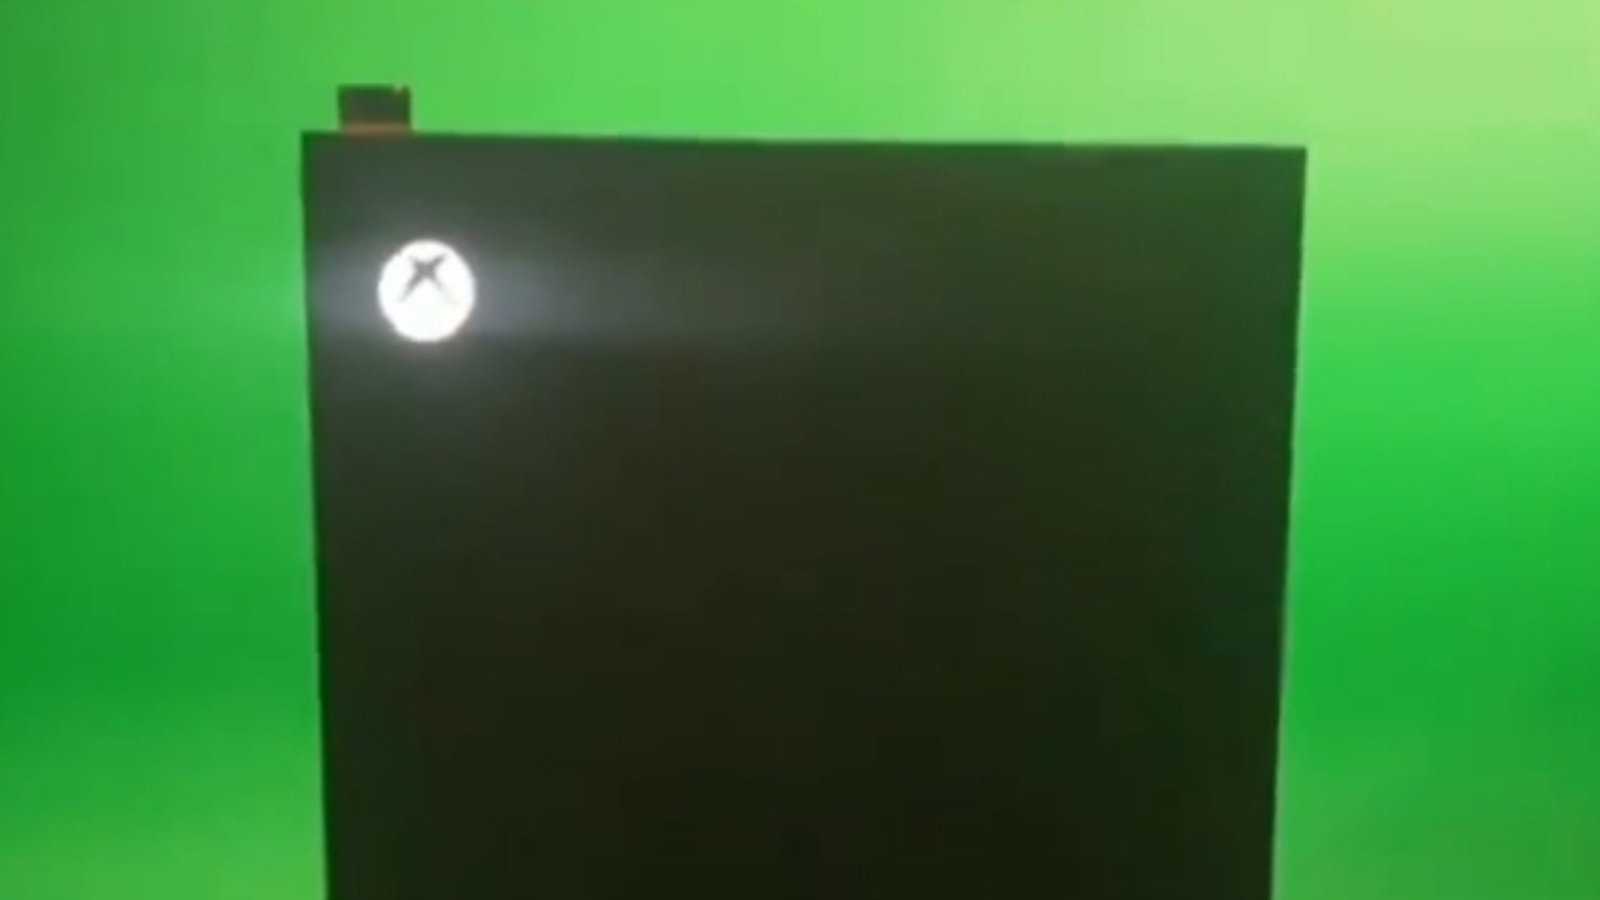 Xbox et Snoop Dogg présentent le Frigo Xbox Series X - Xbox Wire en Francais